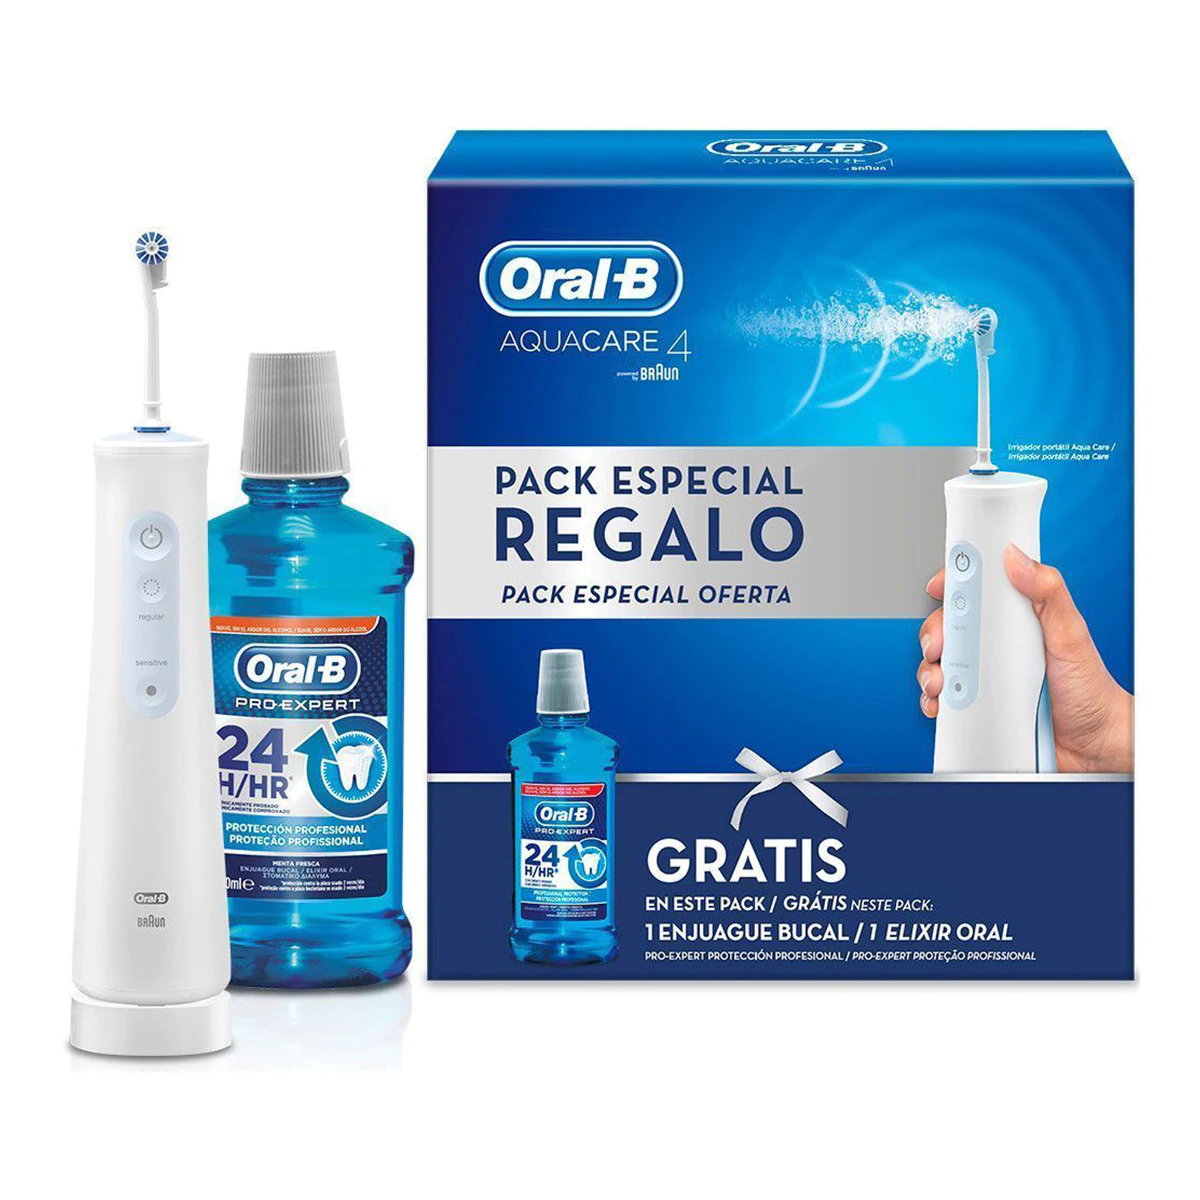 Irrigador dental Braun Oral-B Aquacare 4 con tecnología Oxyjet